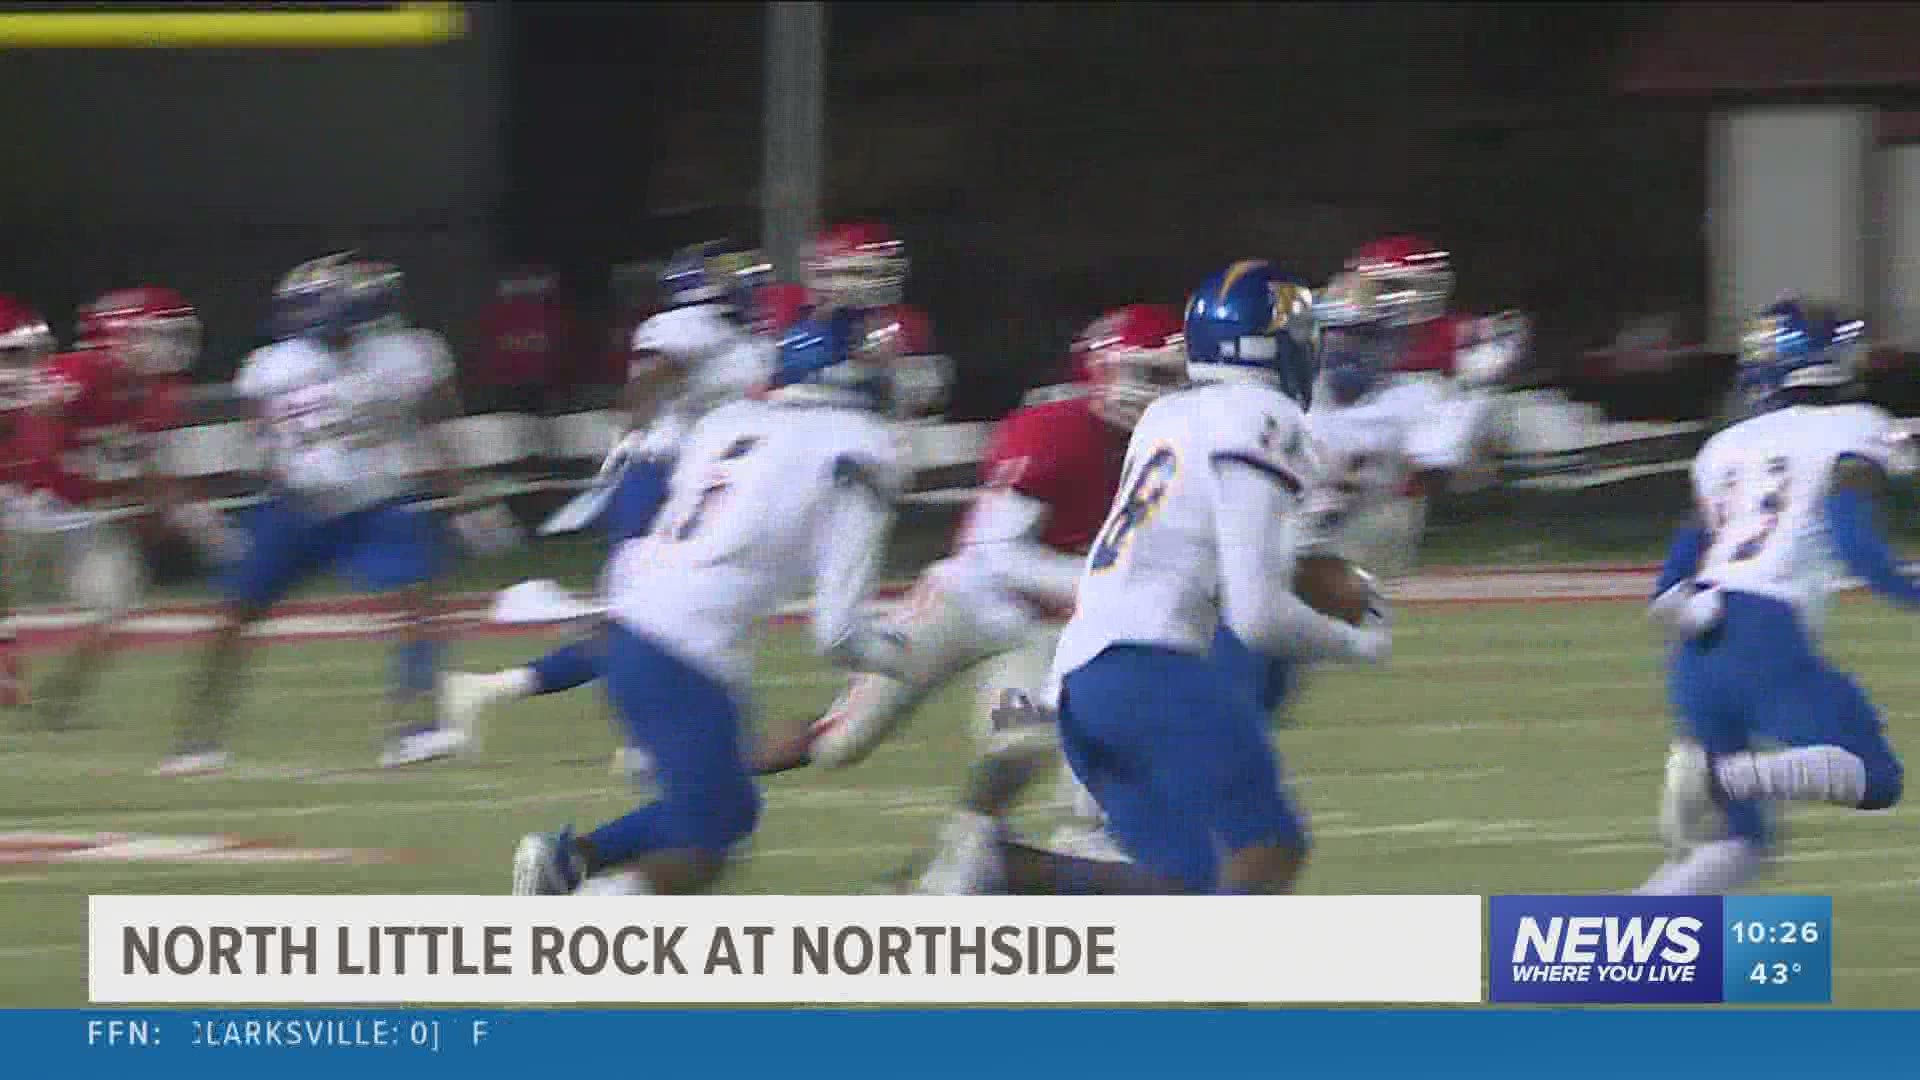 North Little Rock beat Northside (45-7).